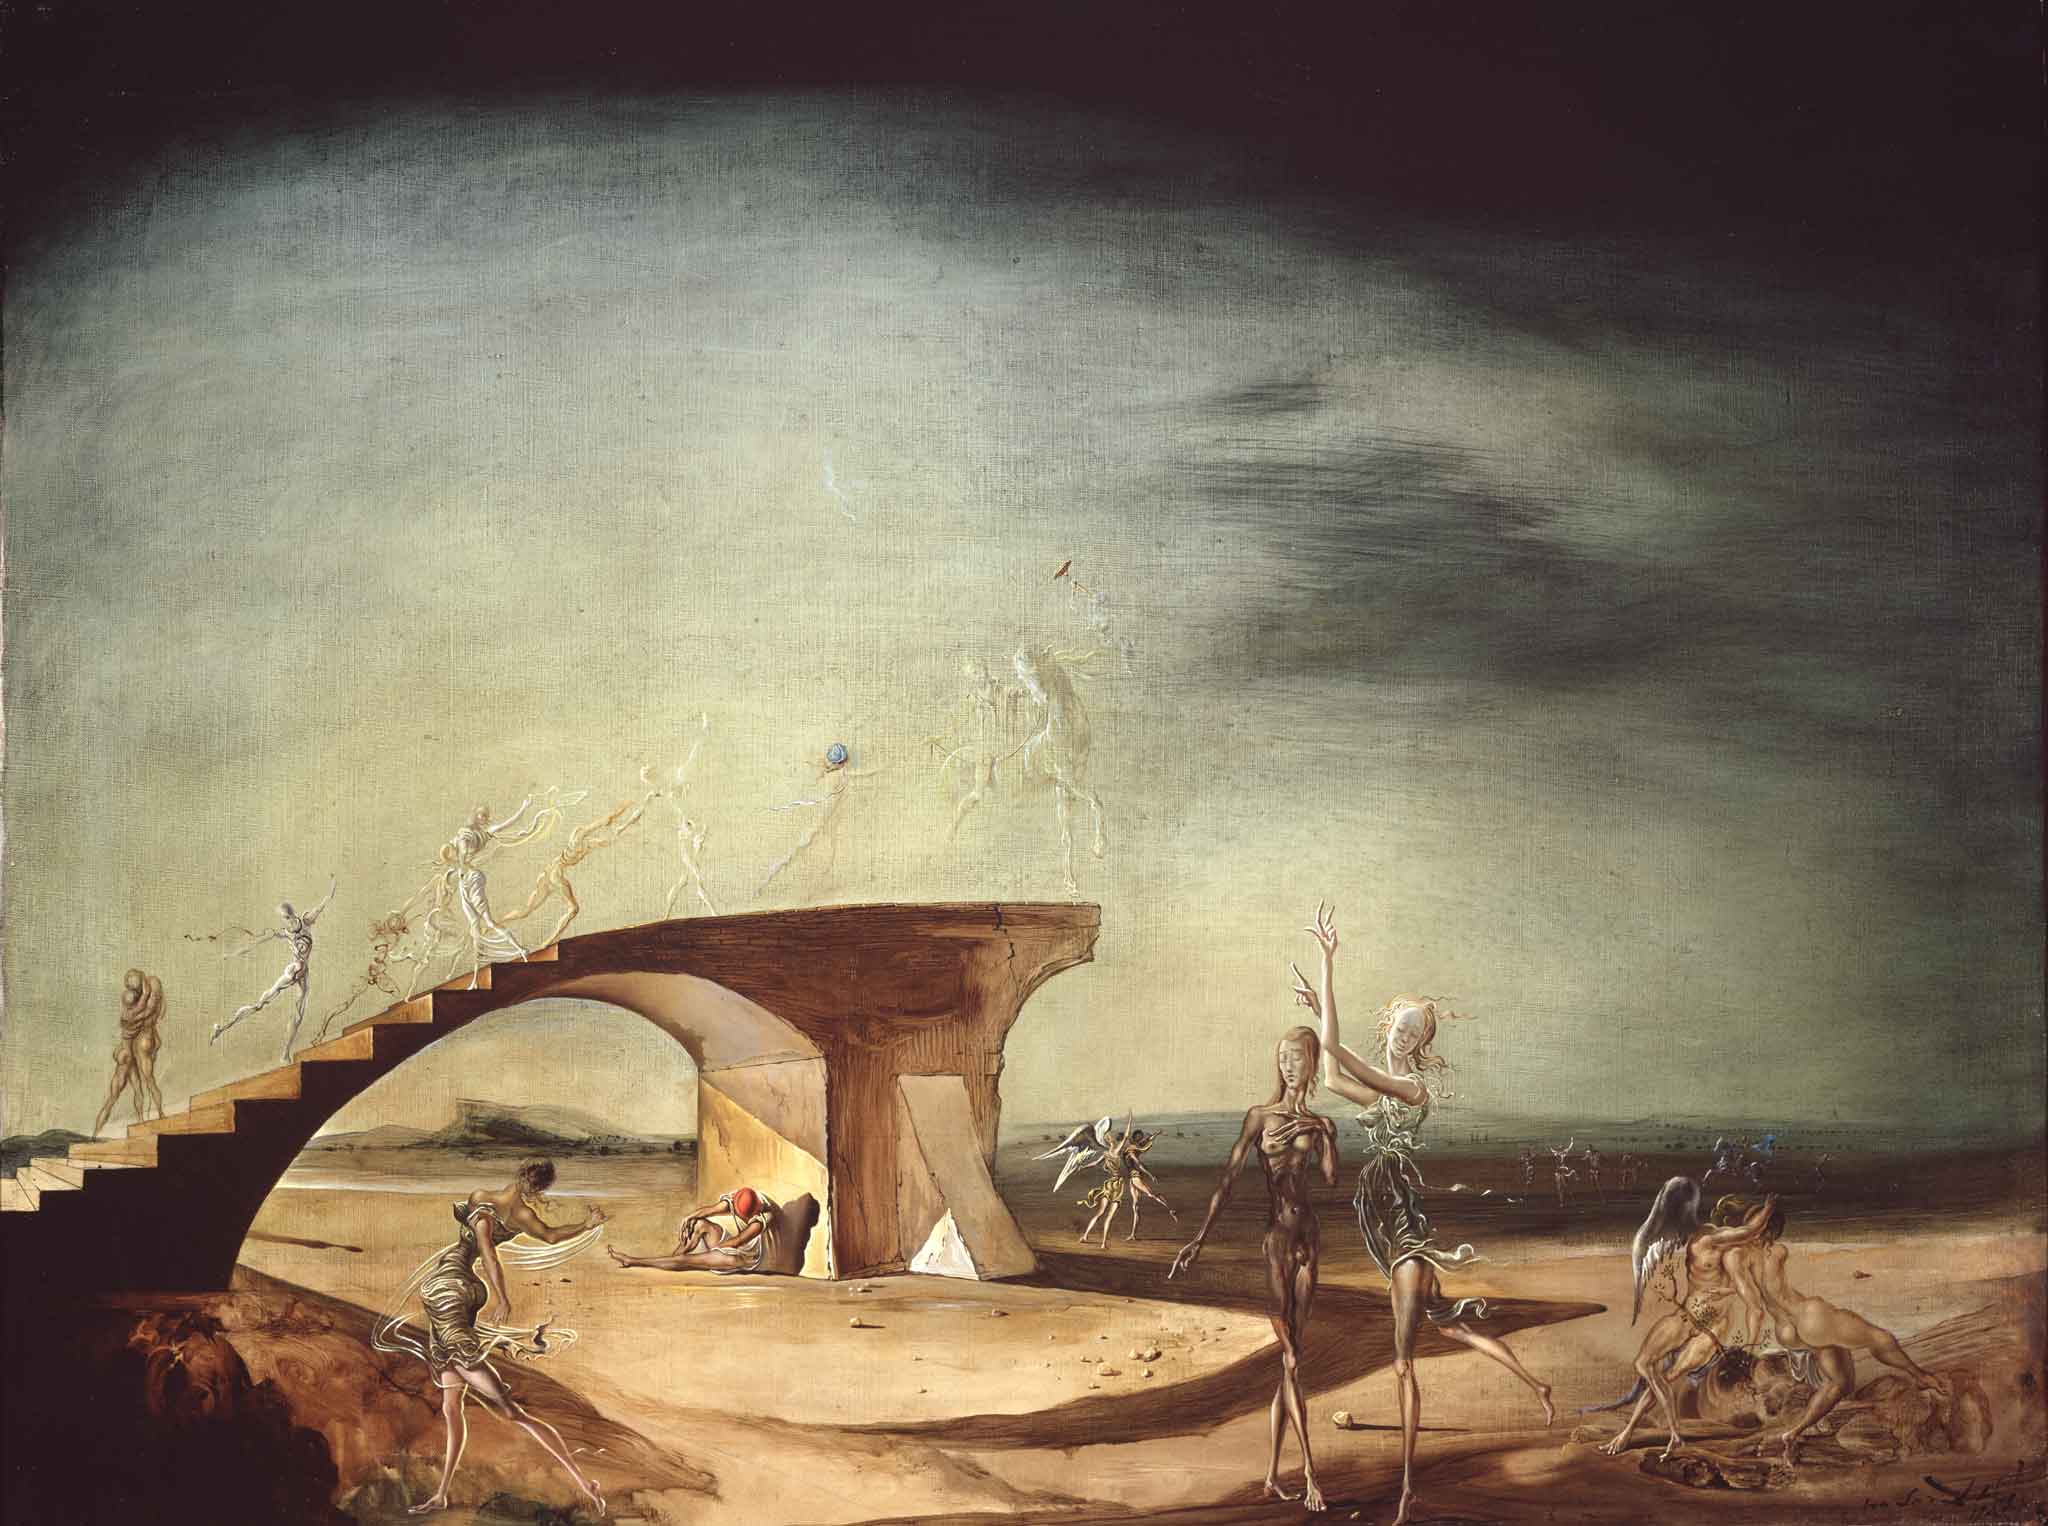 Salvador Dali's painting "Broken Bridge"